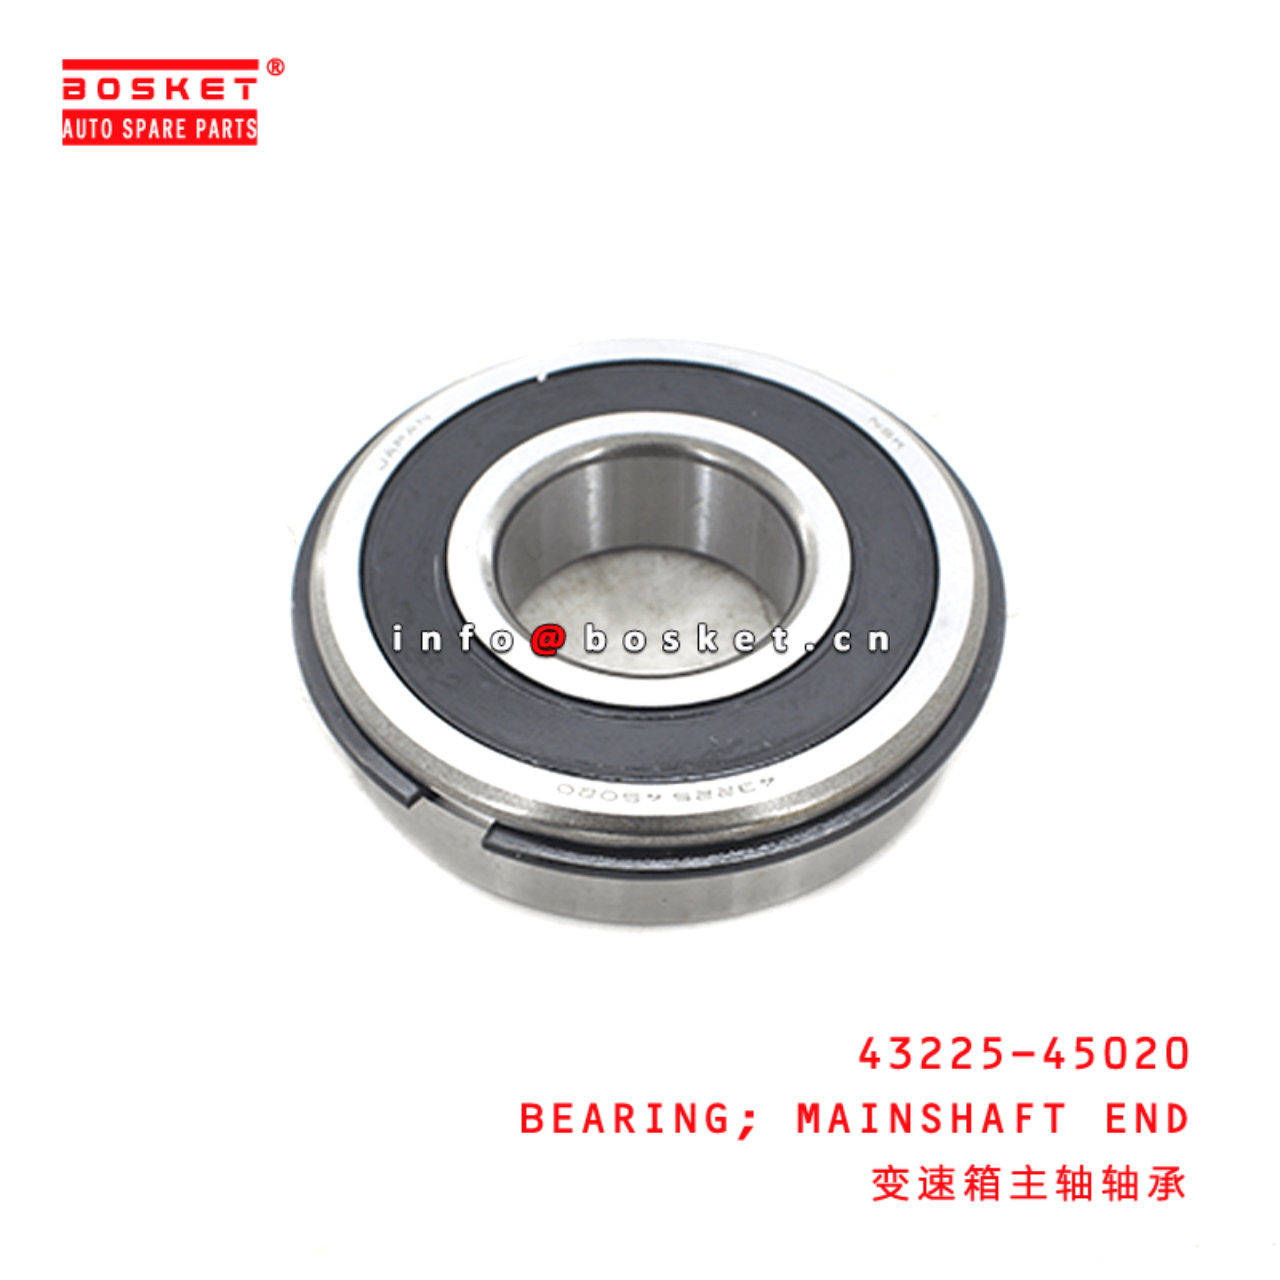  43225-45020 Mainshaft End Bearing Suitable for ISUZU HD72 D4AL